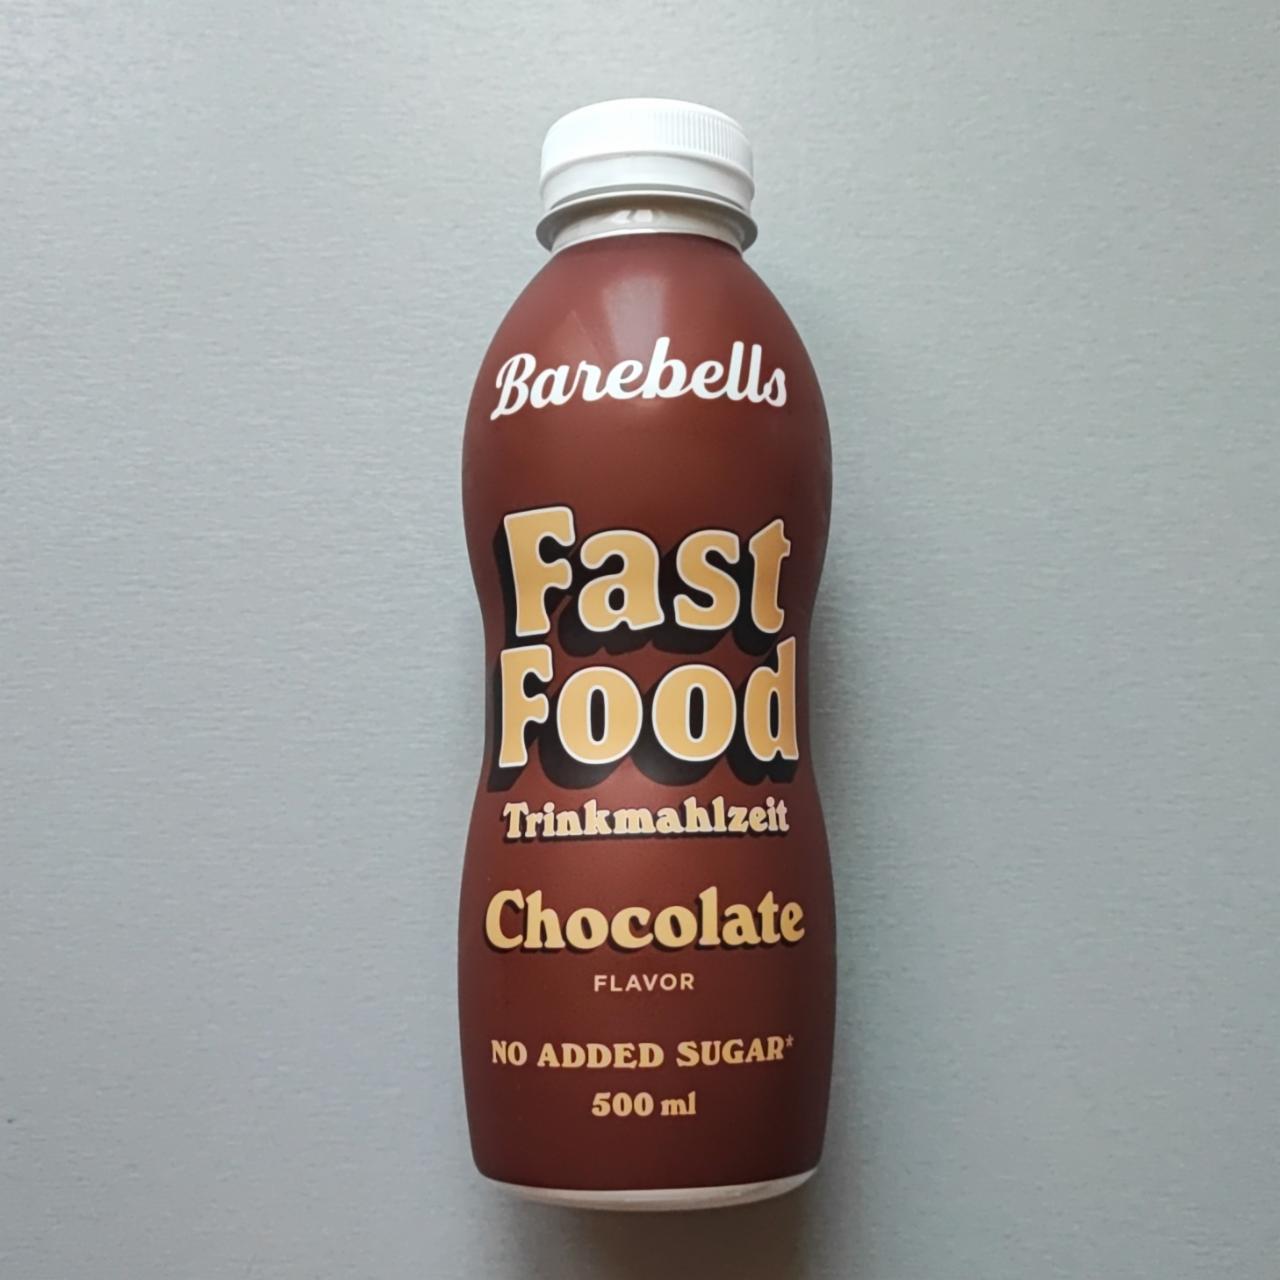 Fotografie - Fast Food Trinkmahlzeit Chocolate Barebells